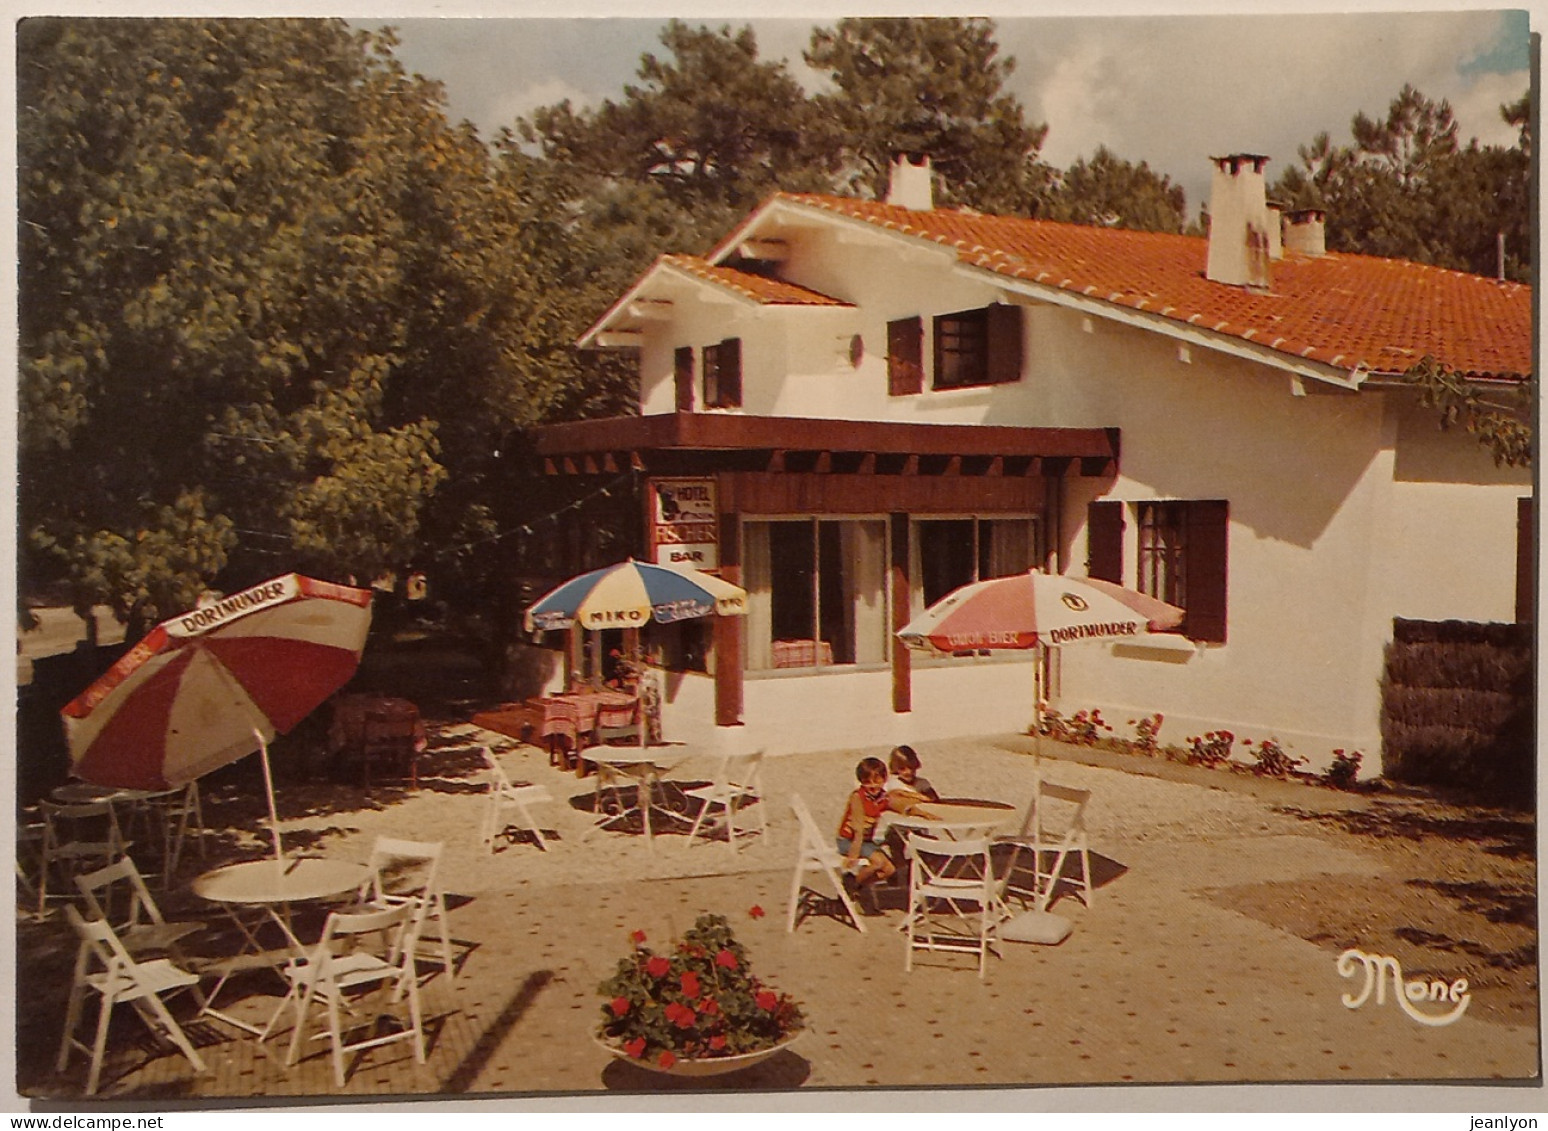 BISCAROSSE (40 Landes) - Auberge Regina - Hotel Restaurant - Terrasse Avec Parasols Miko , Biere Dortmunder ... - Biscarrosse